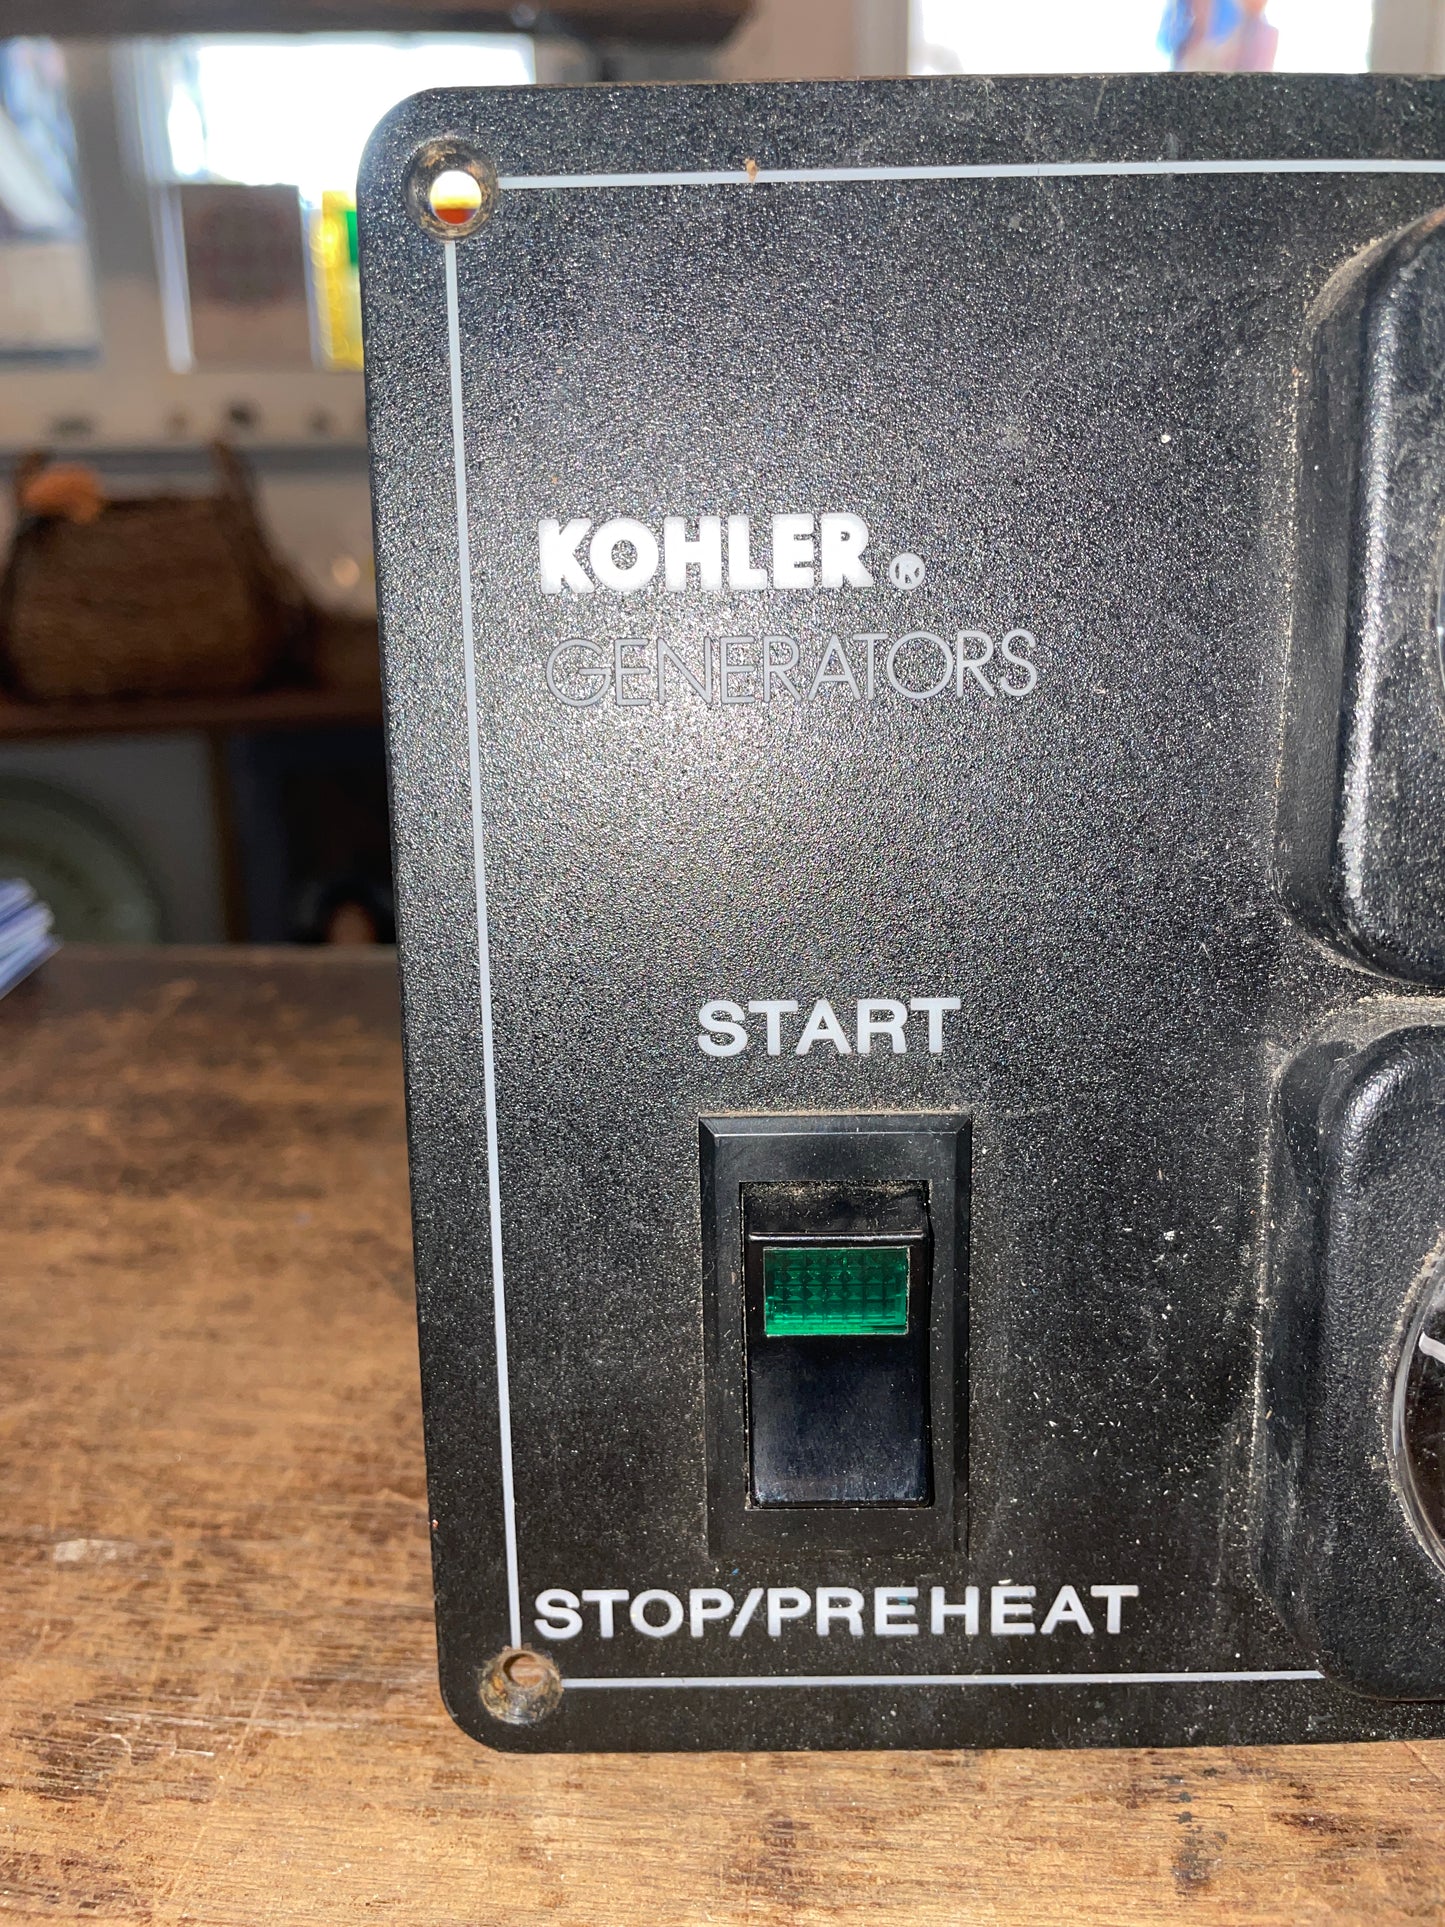 Kohler Generators Control Panel